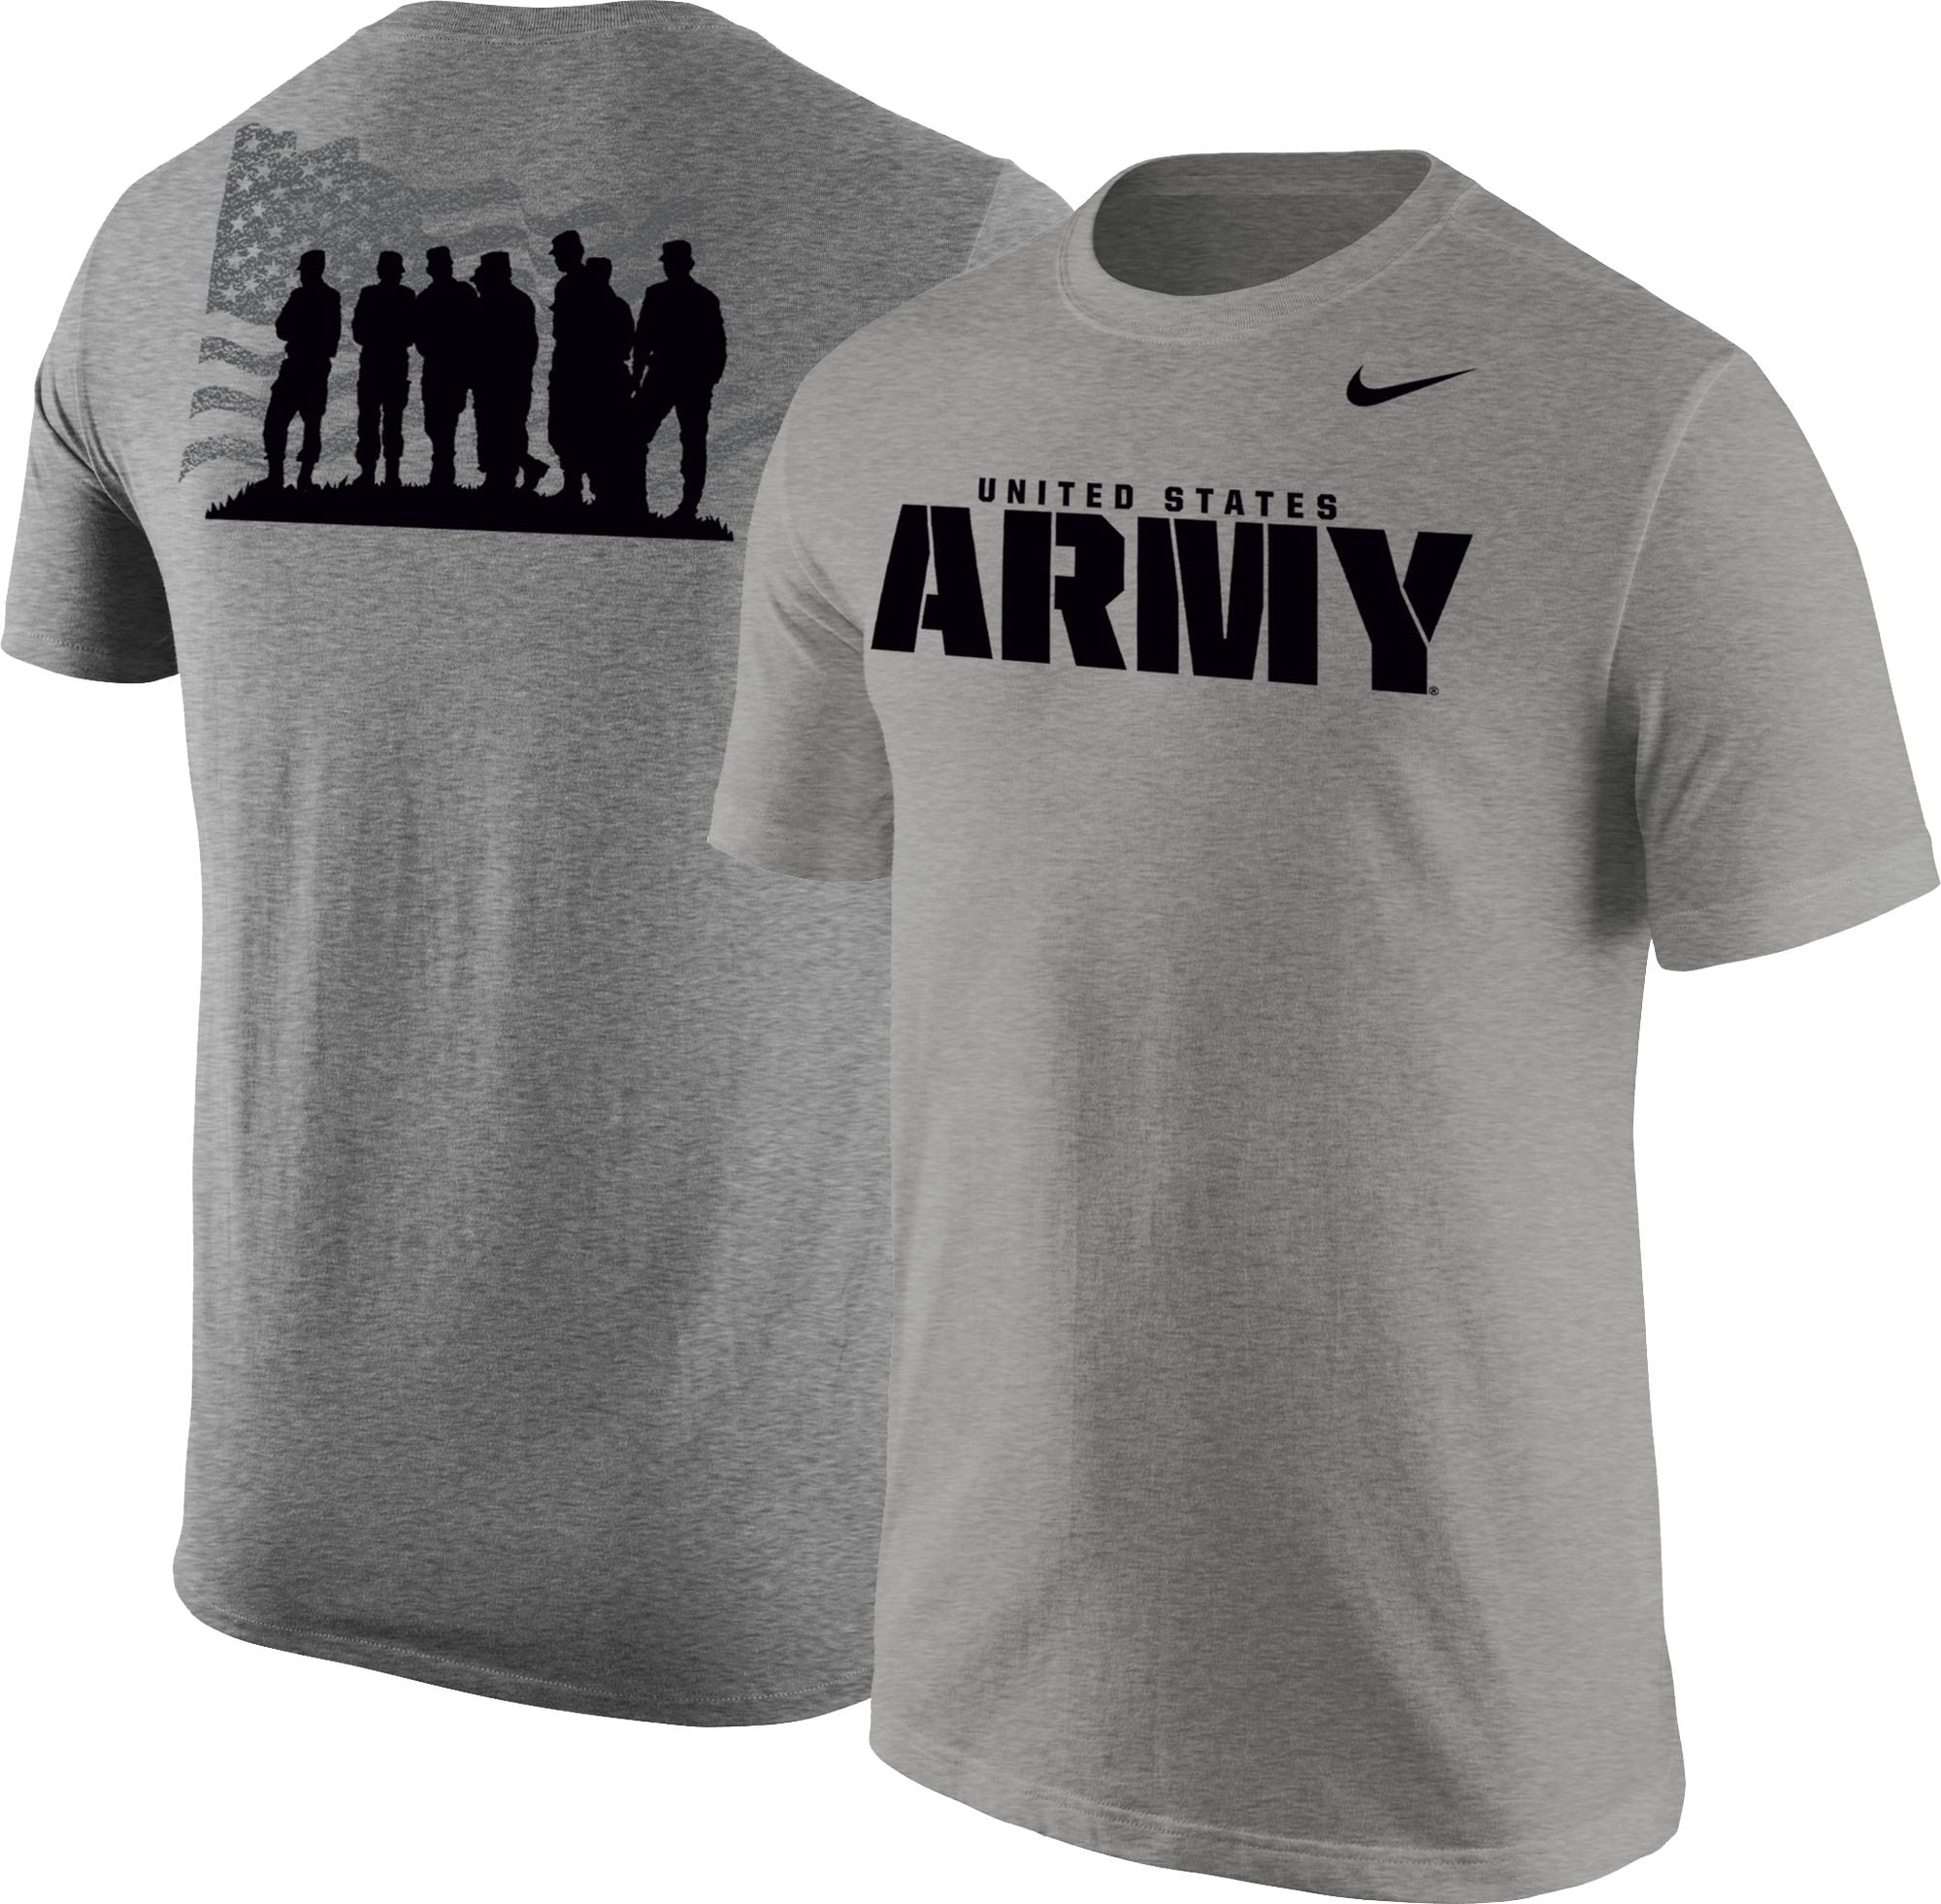 Nike Army Shirt - Army Military